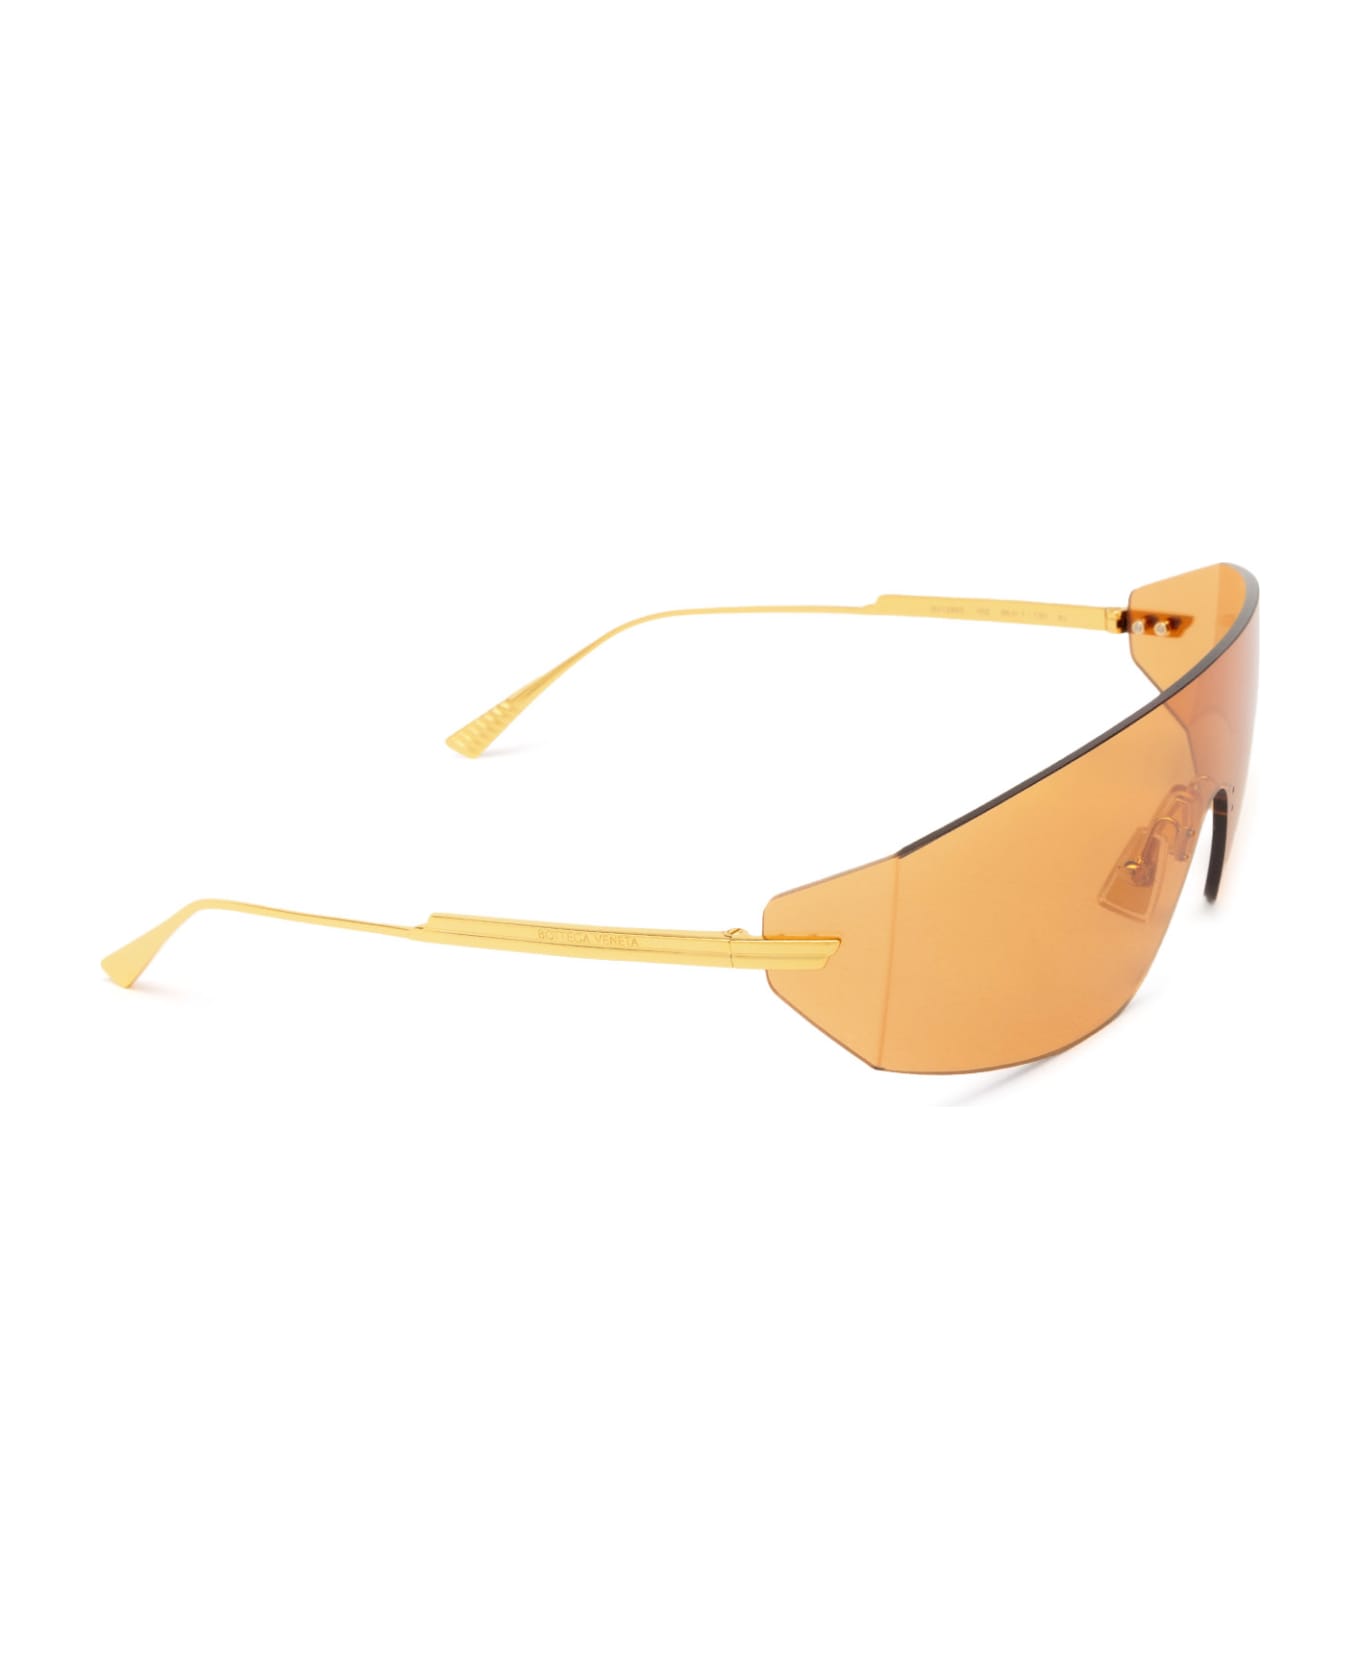 Bottega Veneta Eyewear Bv1299s Gold Sunglasses - Gold